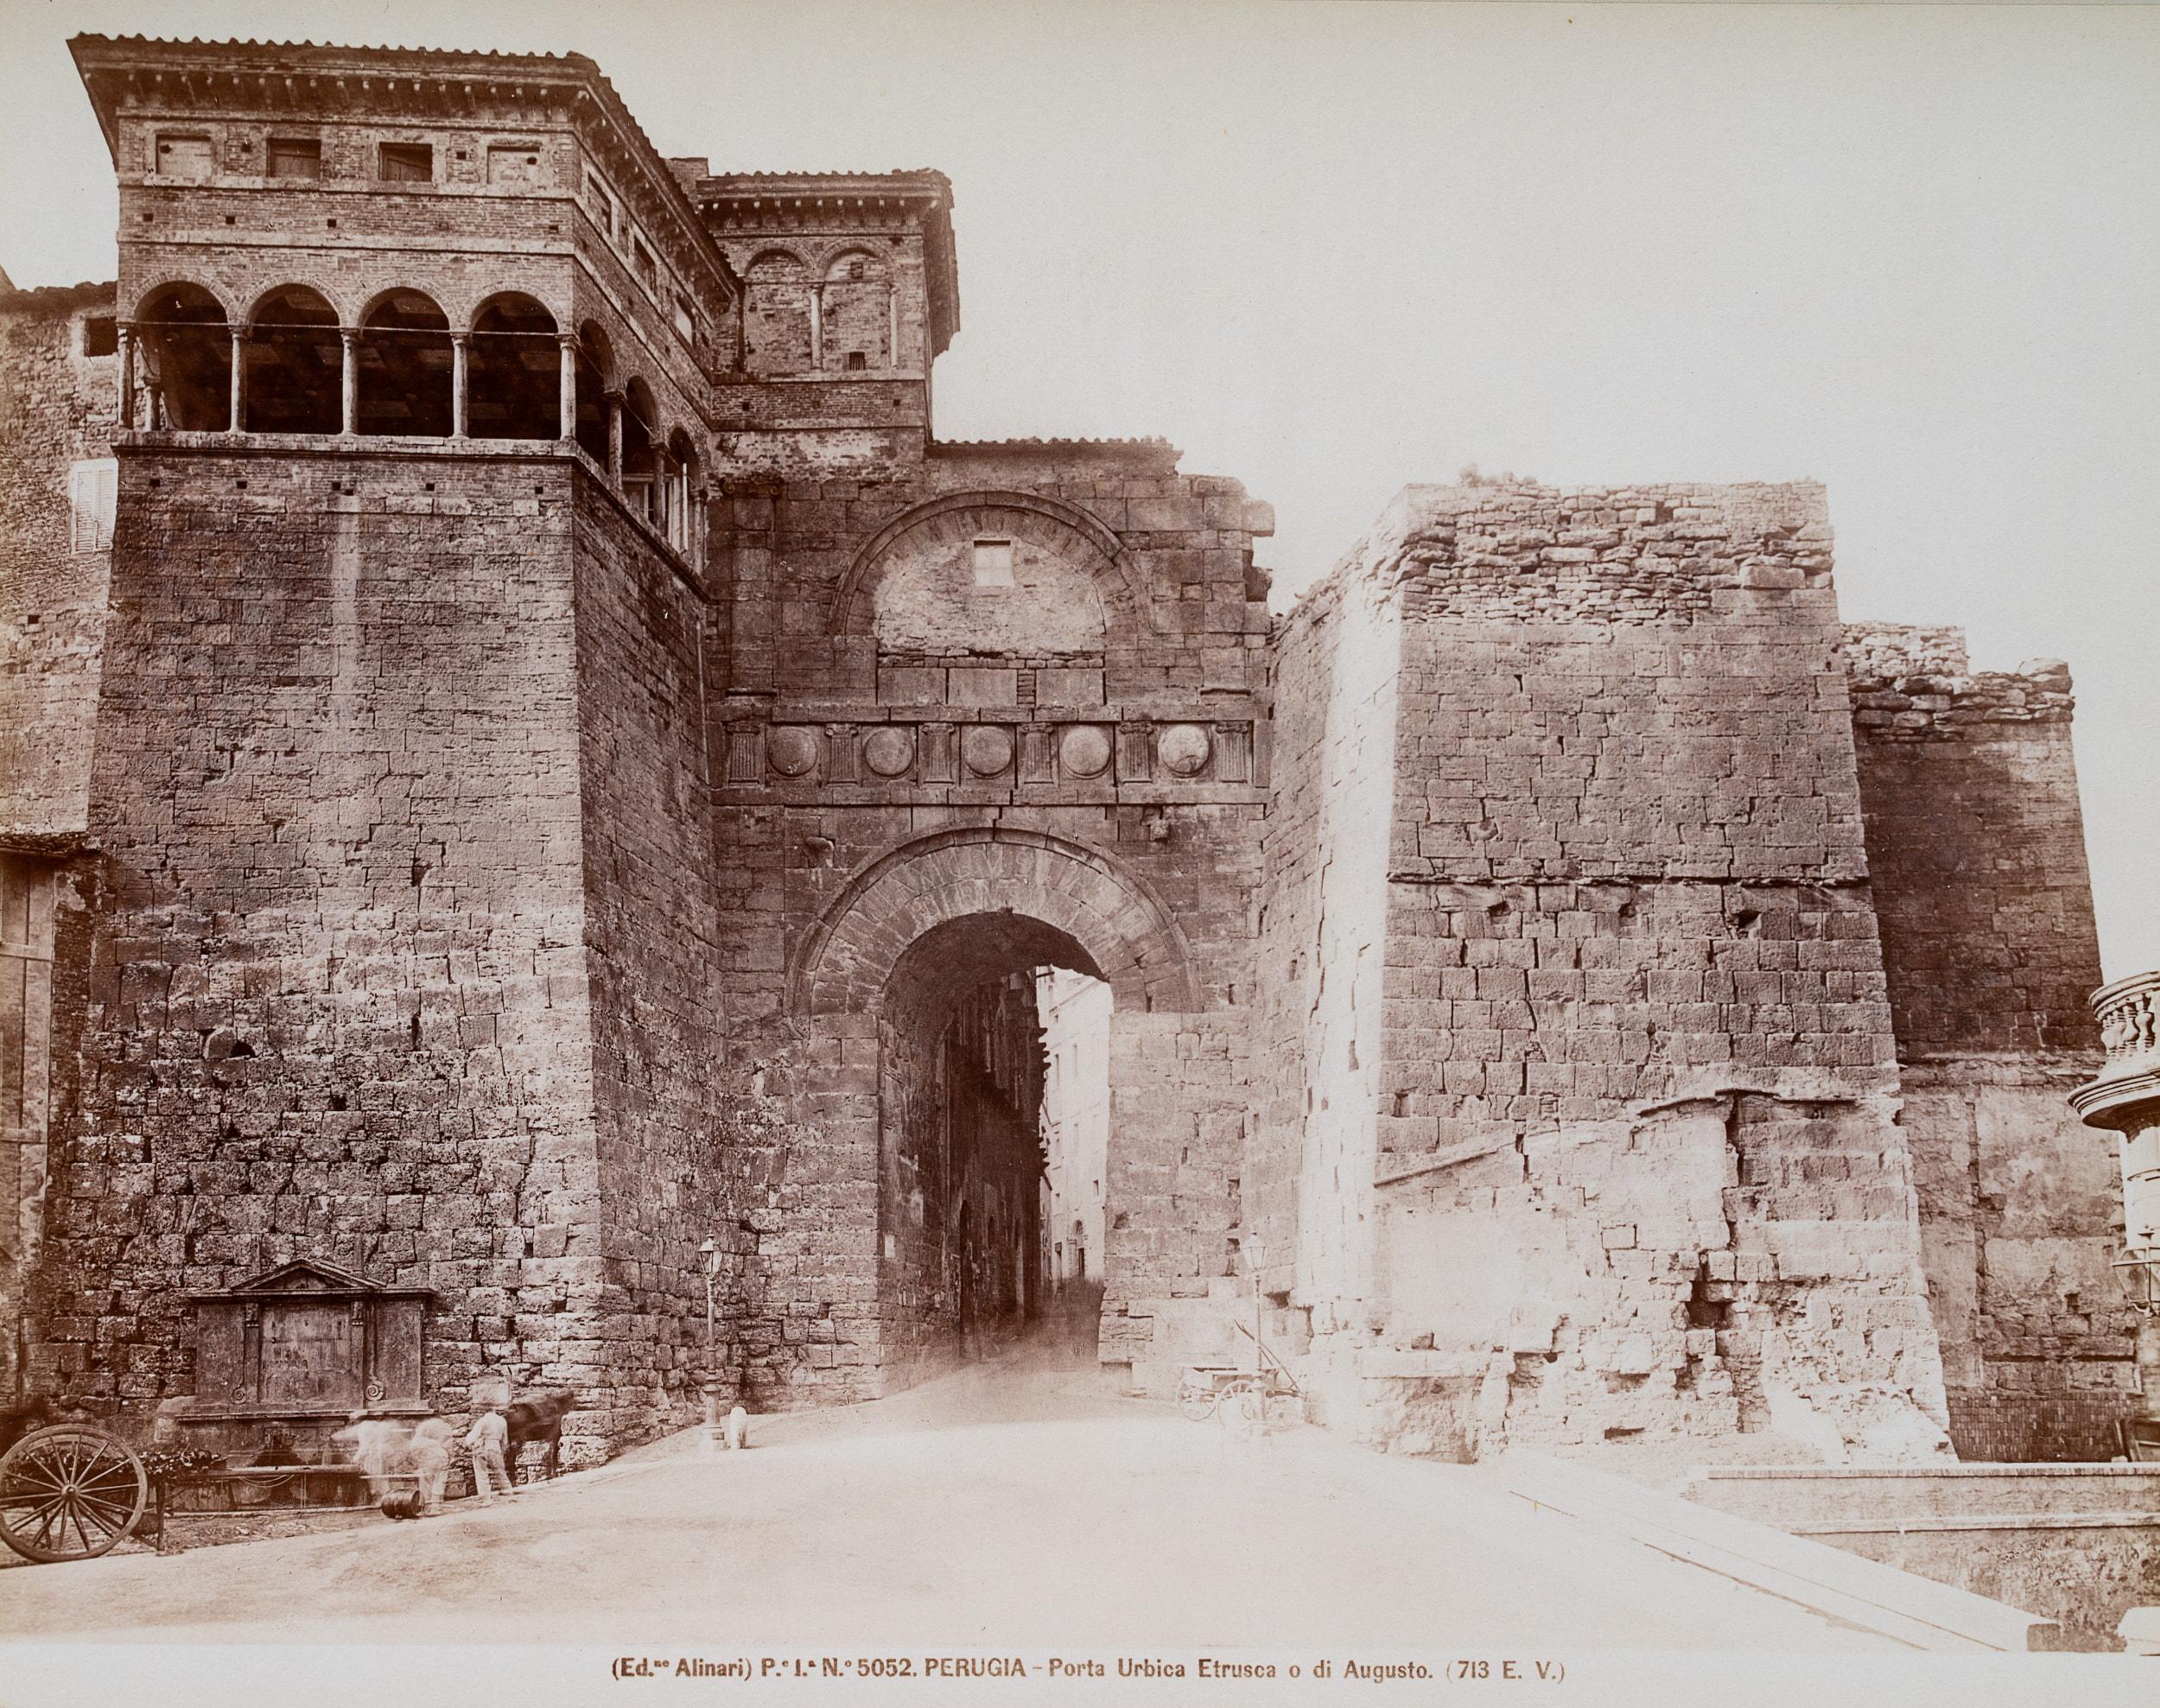 Fratelli Alinari Landscape Photograph – Porta Urbica Etrusca oder von Augustus, Perugia